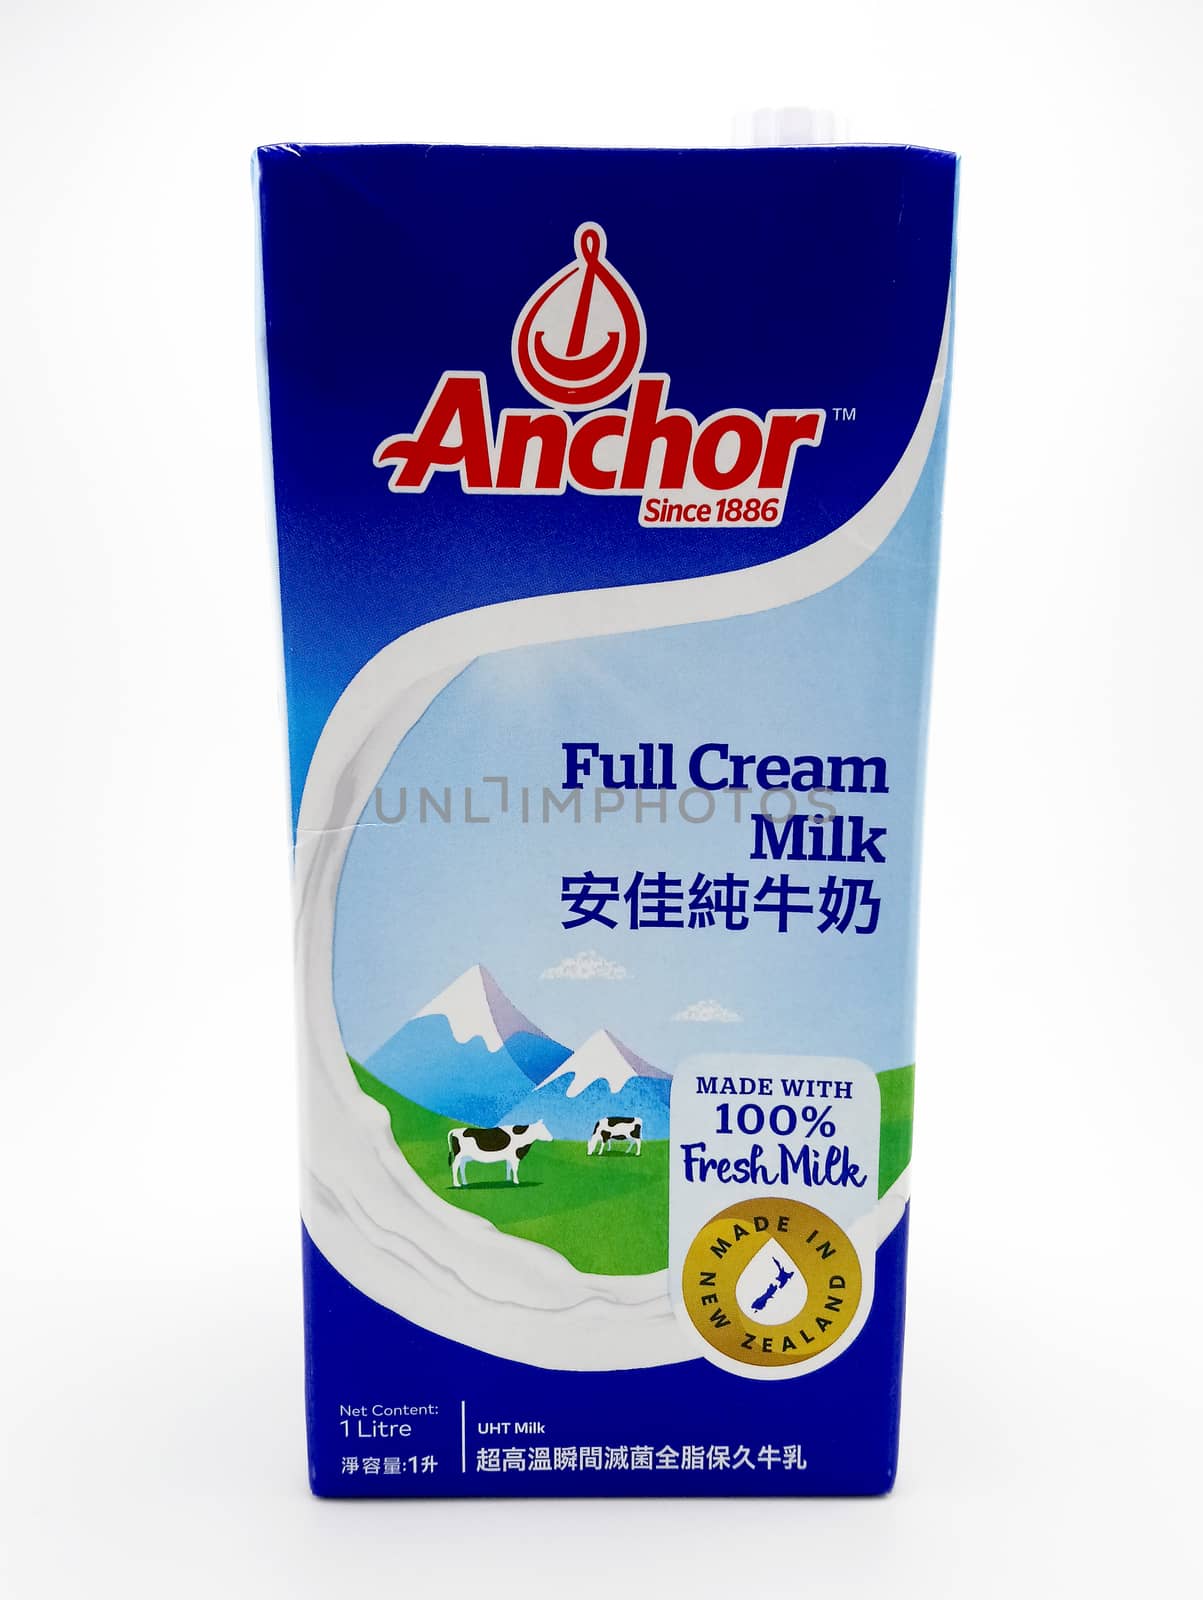 Anchor full cream milk in Manila, Philippines by imwaltersy